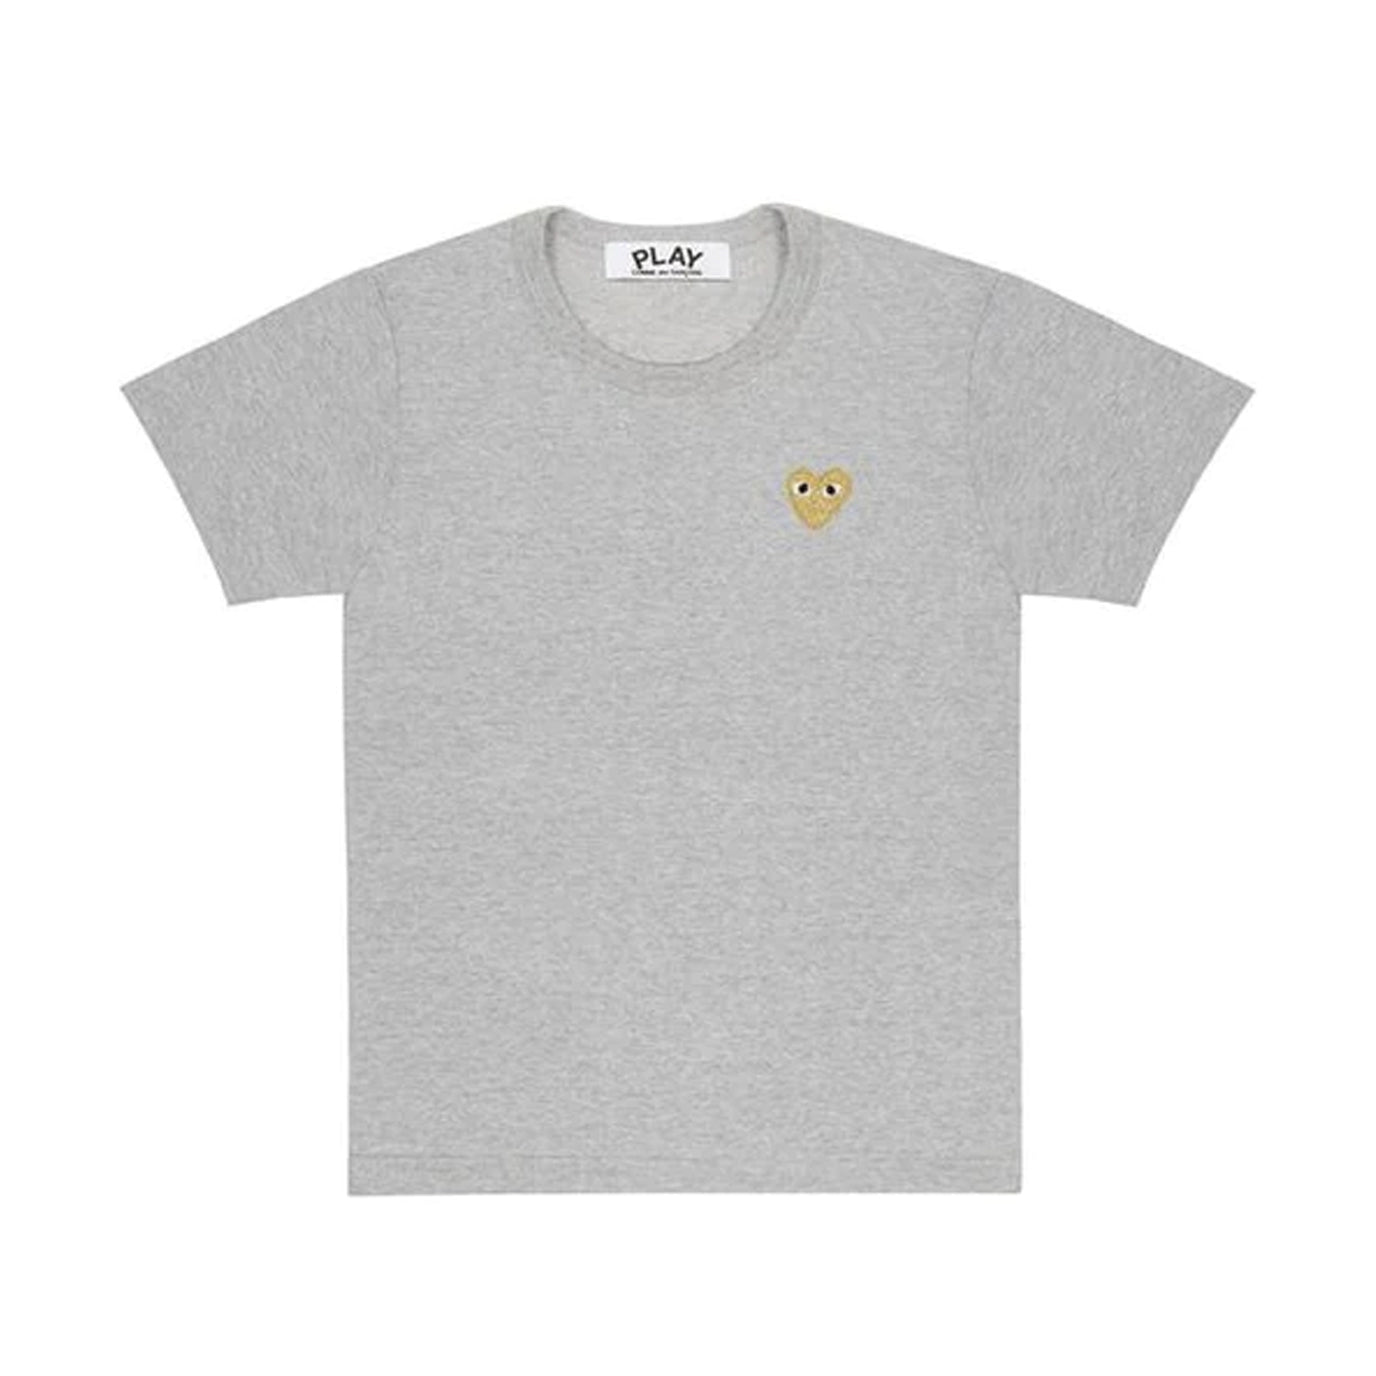 Play CDG Gold Heart Grey T-Shirt